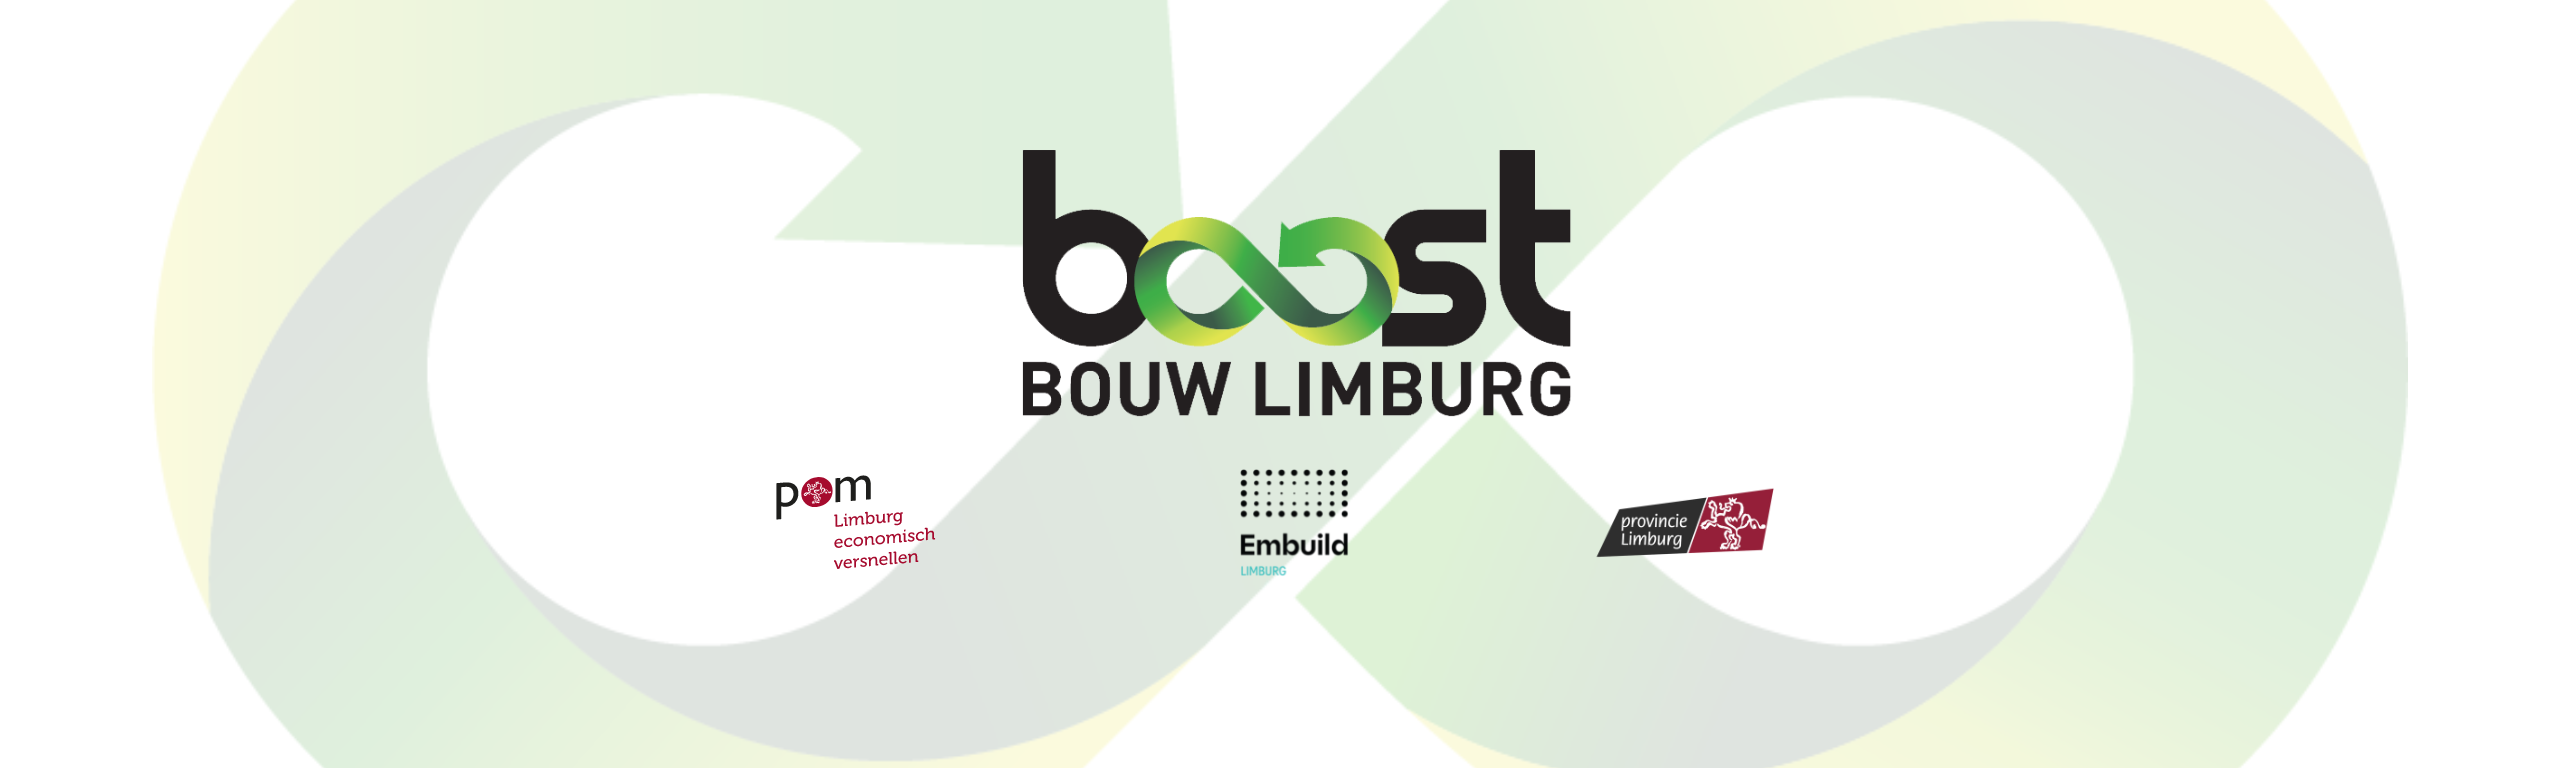 Boost Bouw Limburg